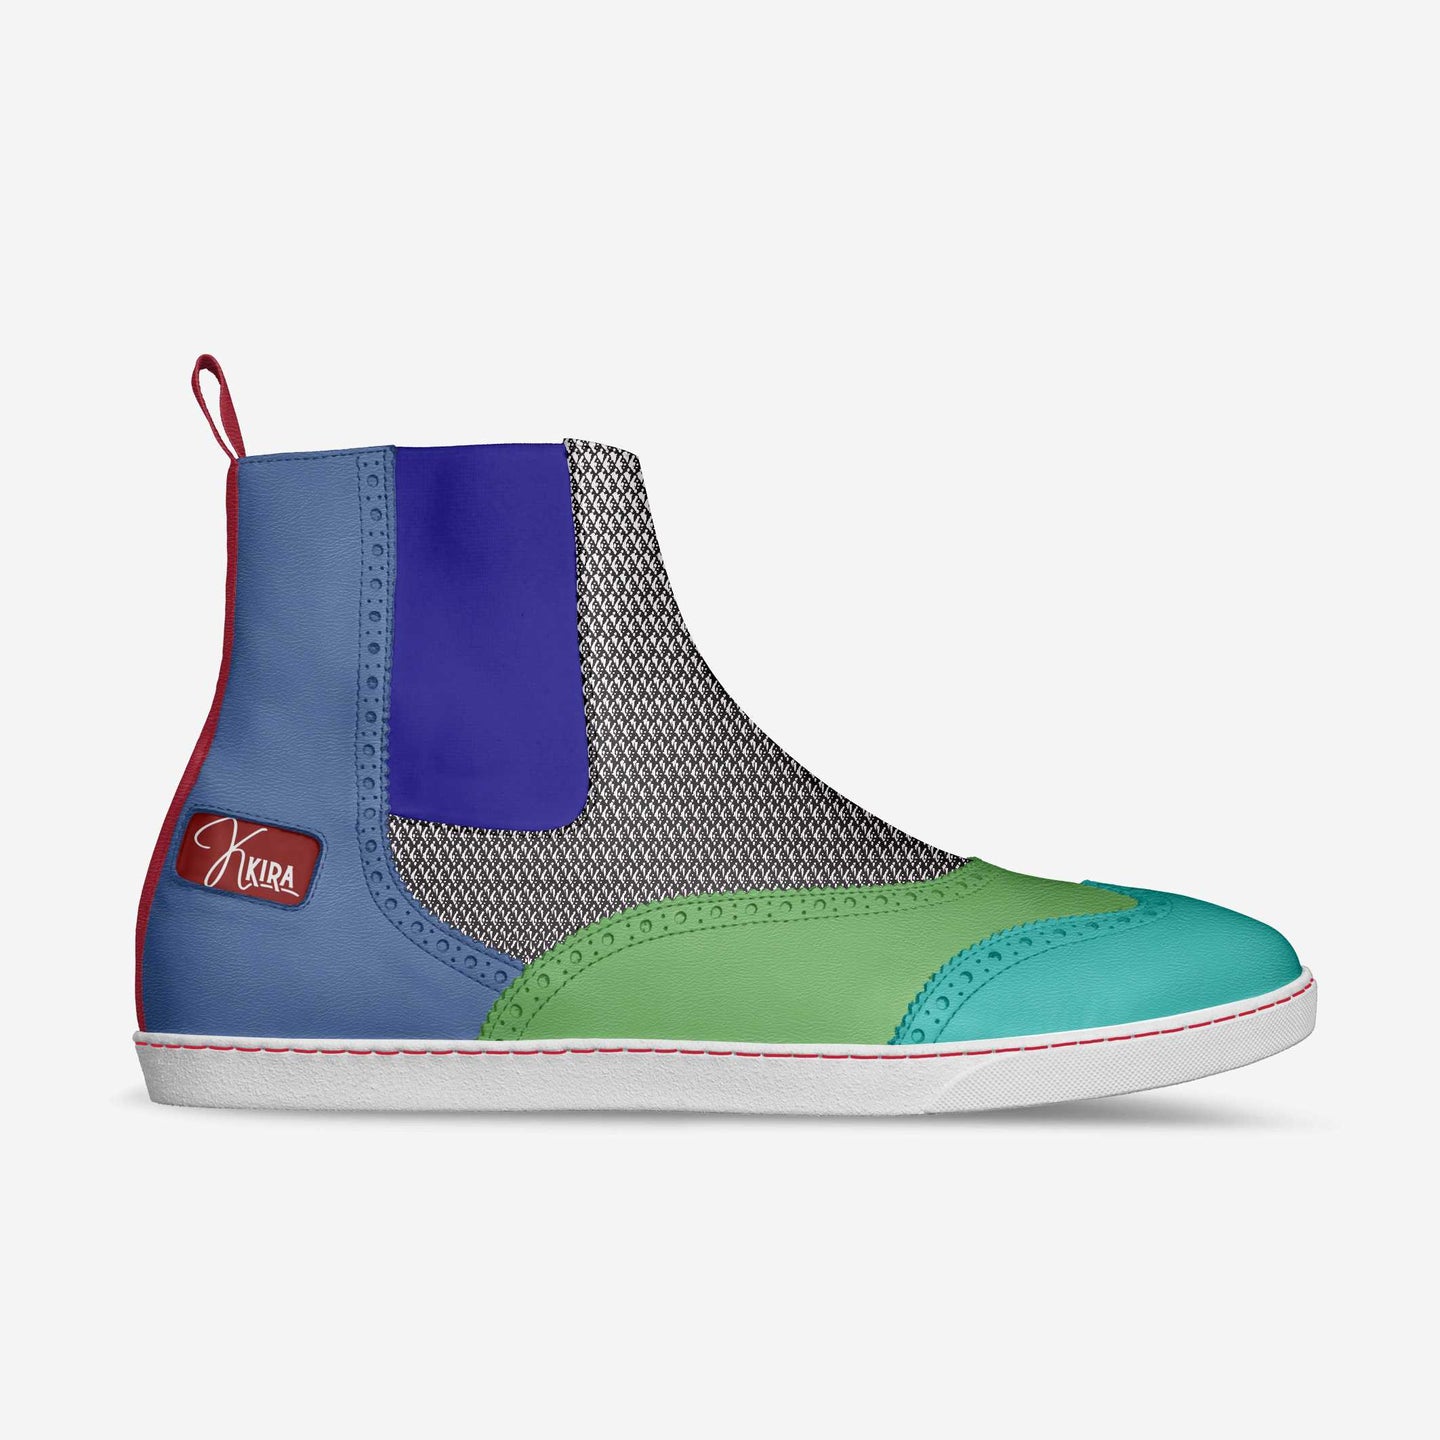 Men's Colorful Boots | Slip-On Shoes | Kkira Shoes